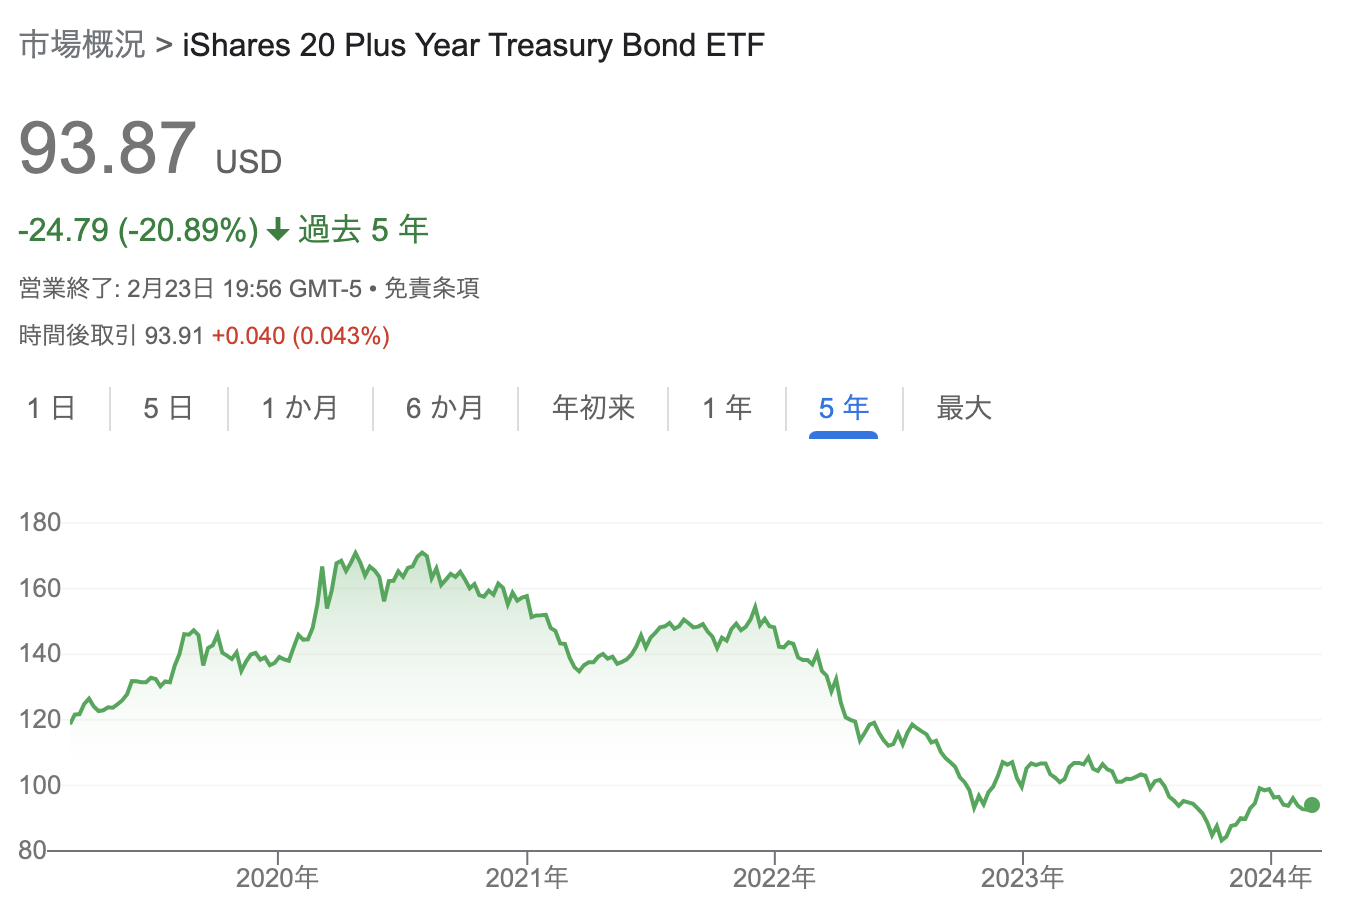   iShares 20 Plus Year Treasury Bond ETF